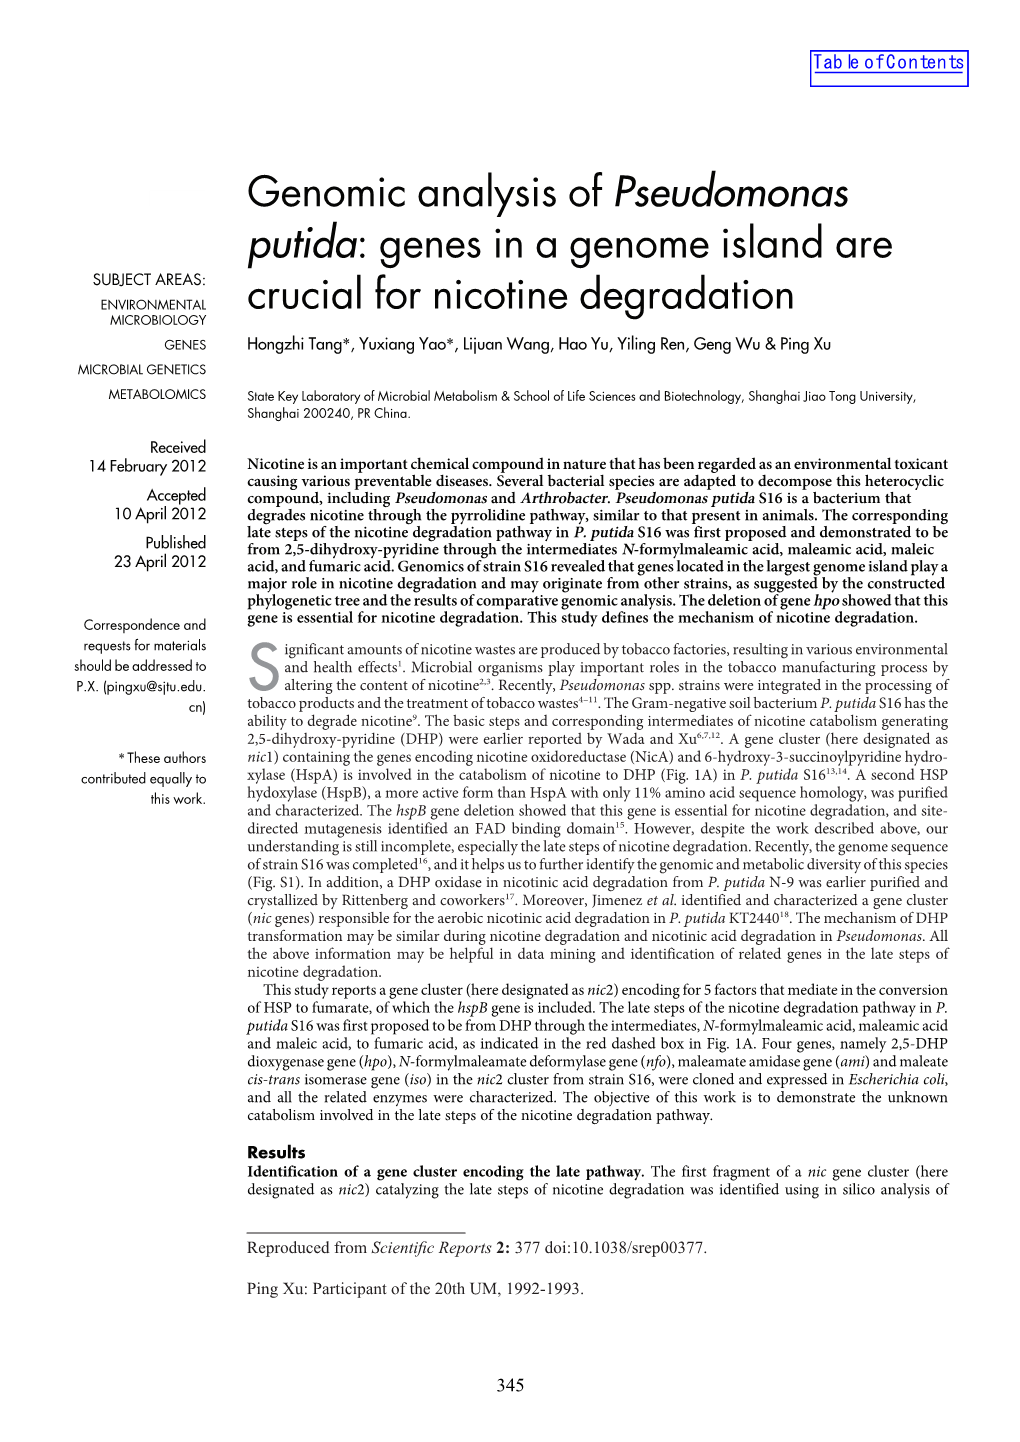 Genomic Analysis of Pseudomonas Putida: Genes in a Genome Island Are Crucial for Nicotine Degradation